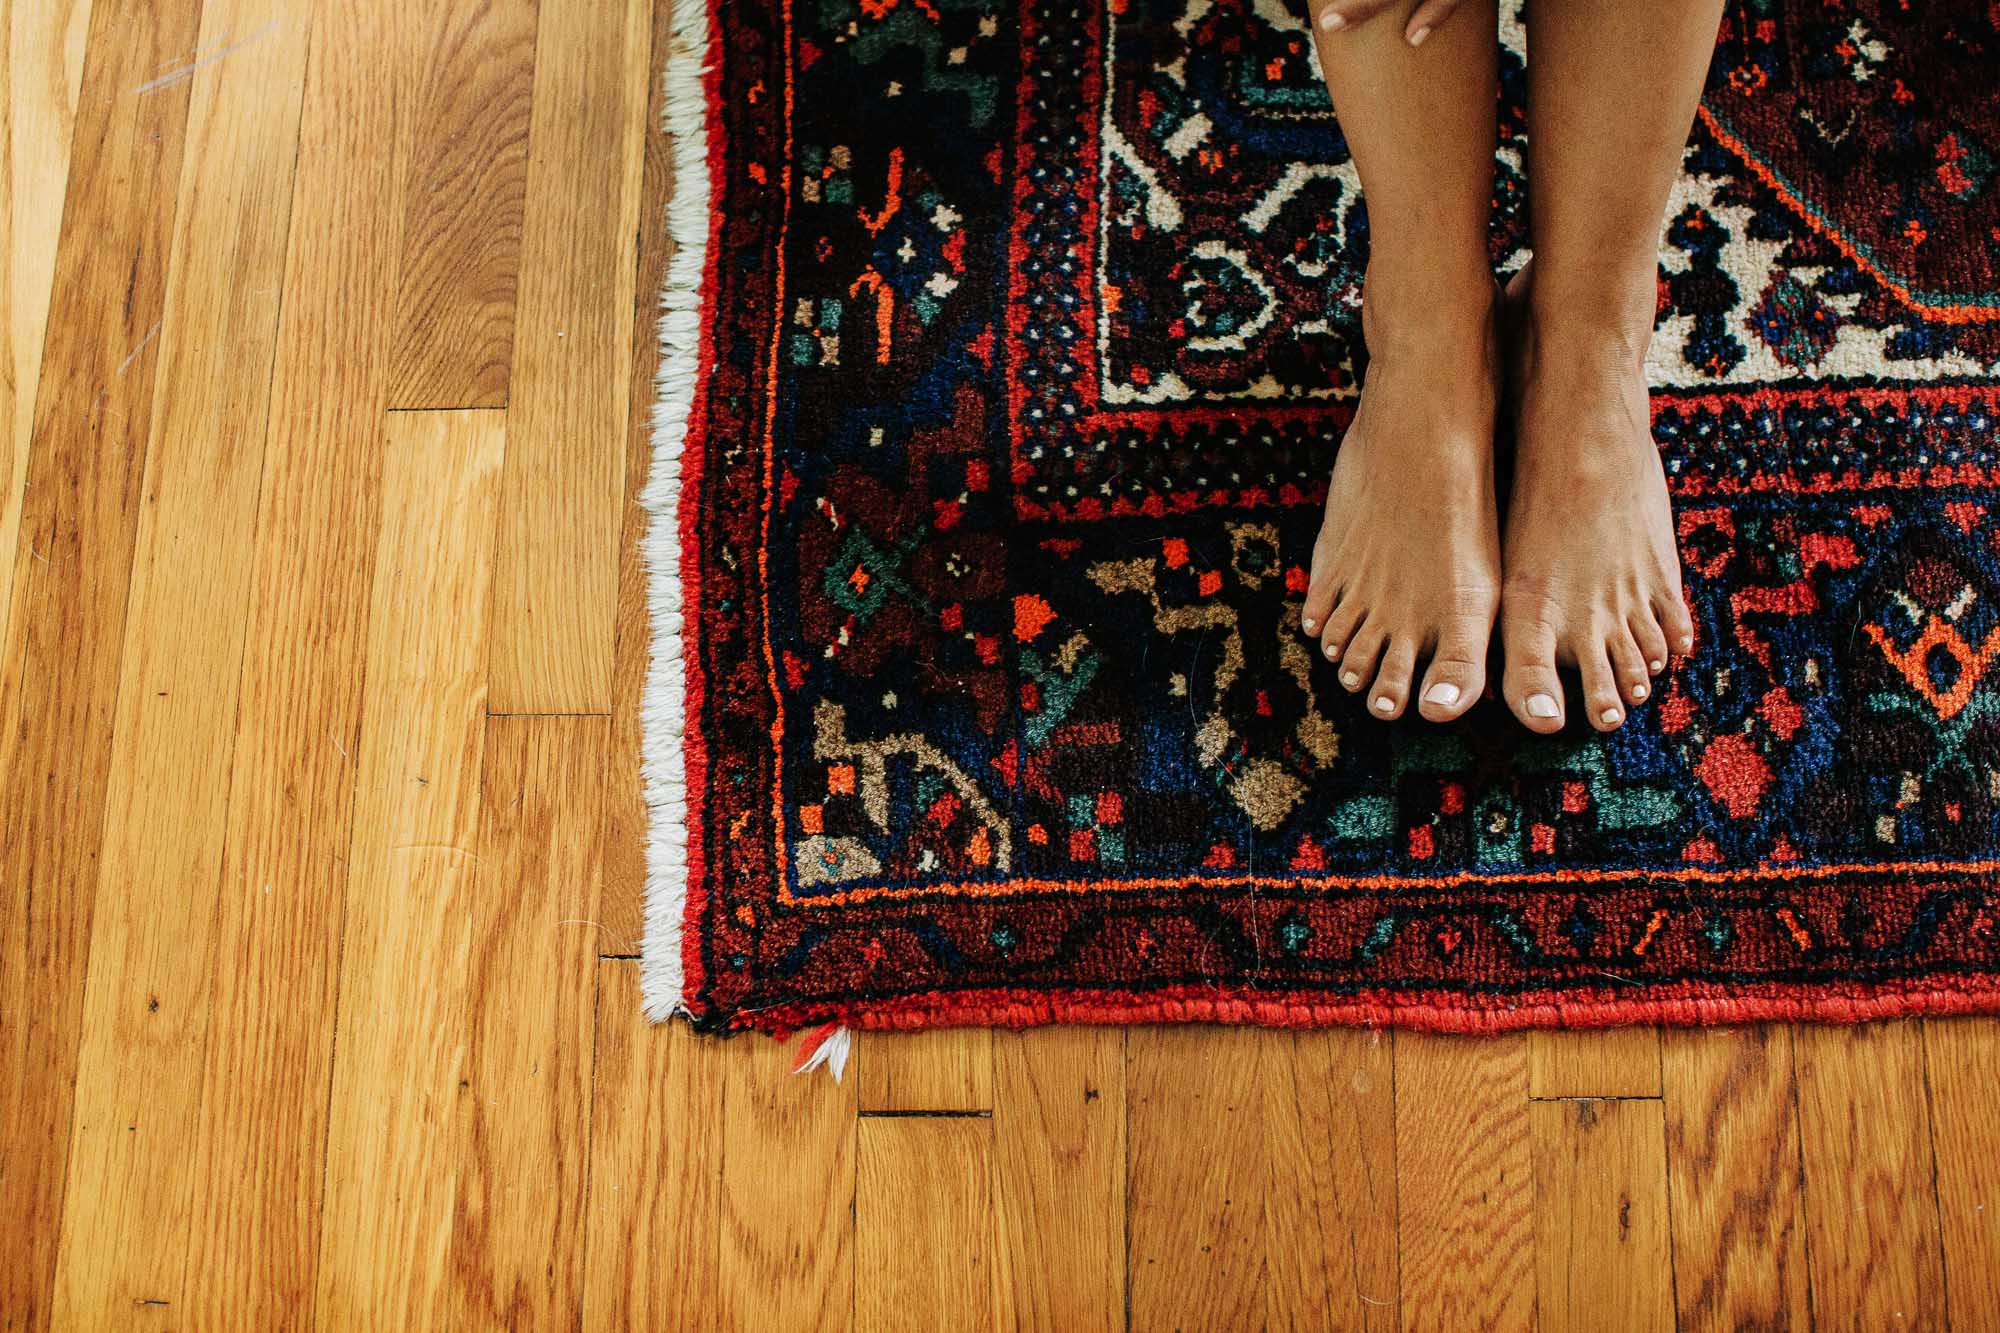 To bare feet on an oriental rug on a hardwood floor